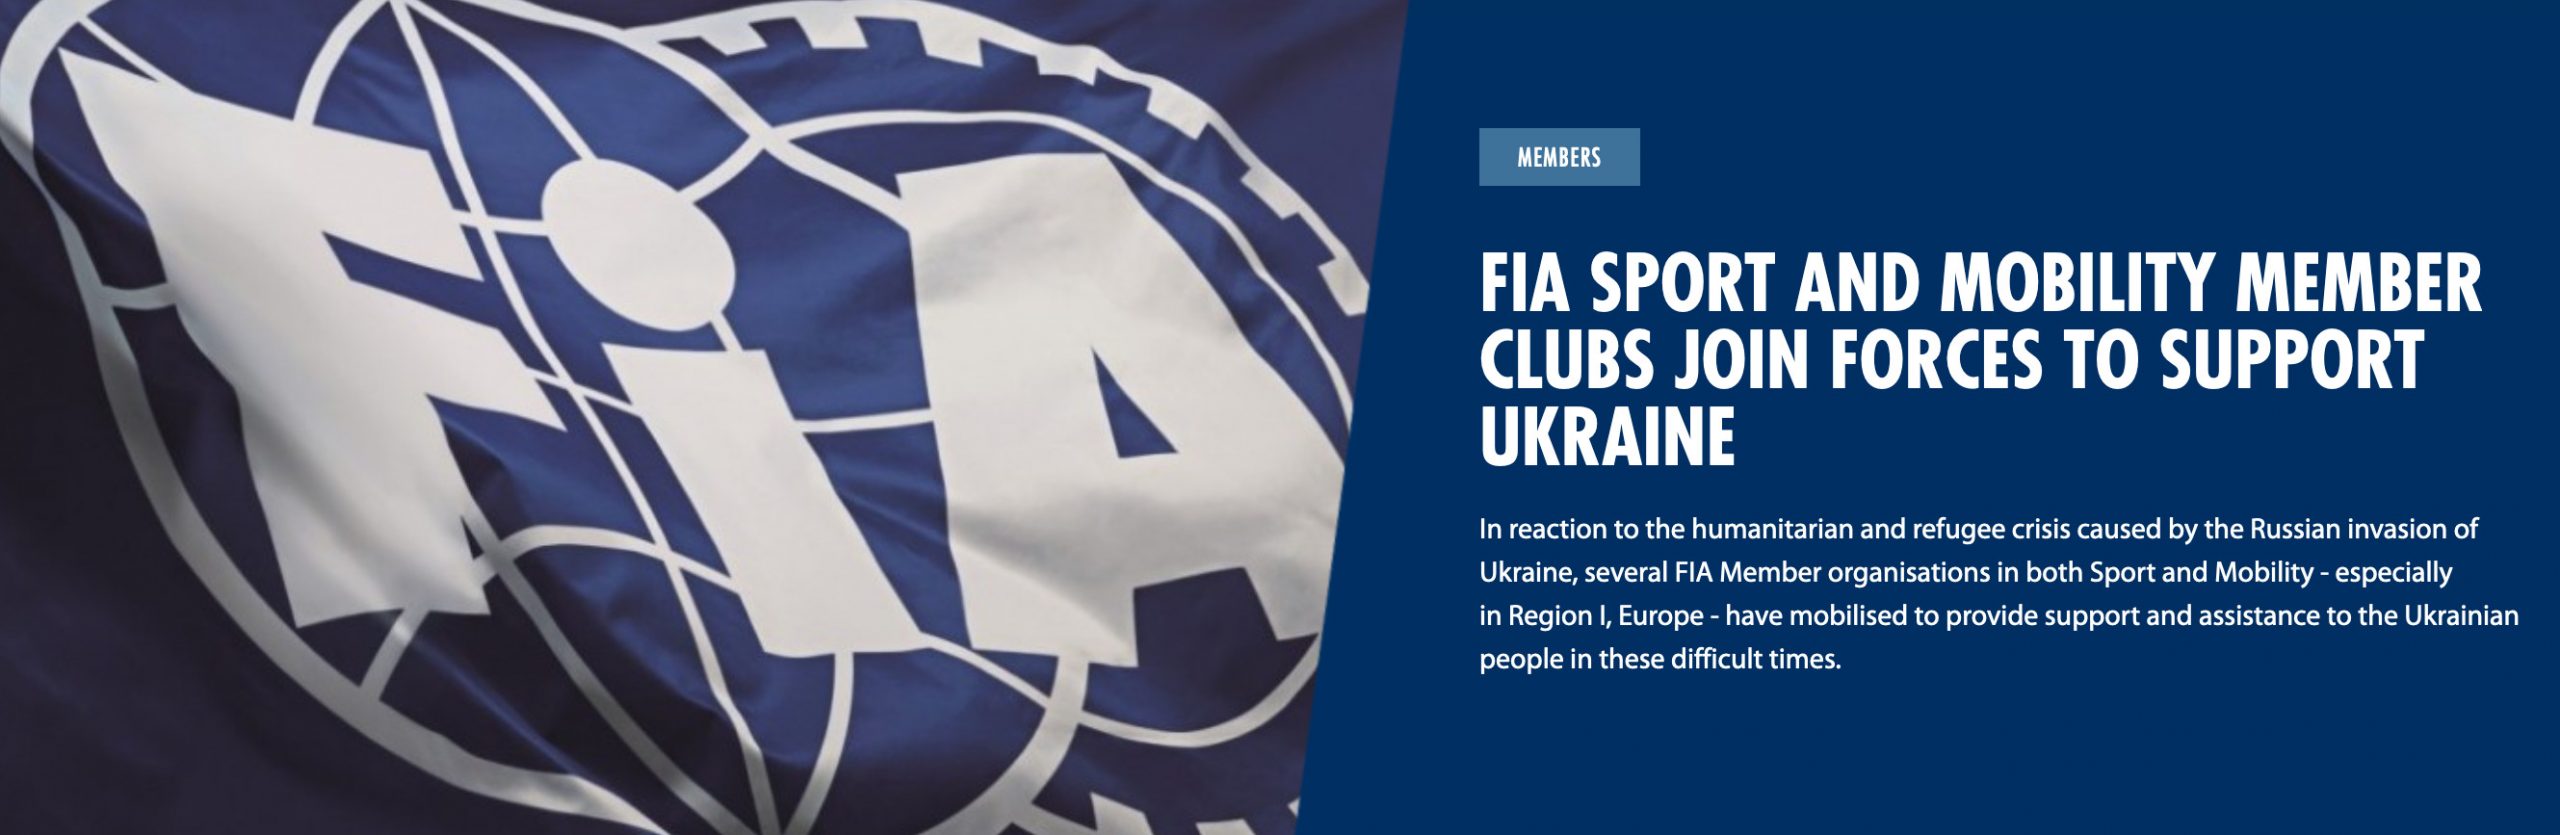 FIA-Banner pro Ukraine, 2022